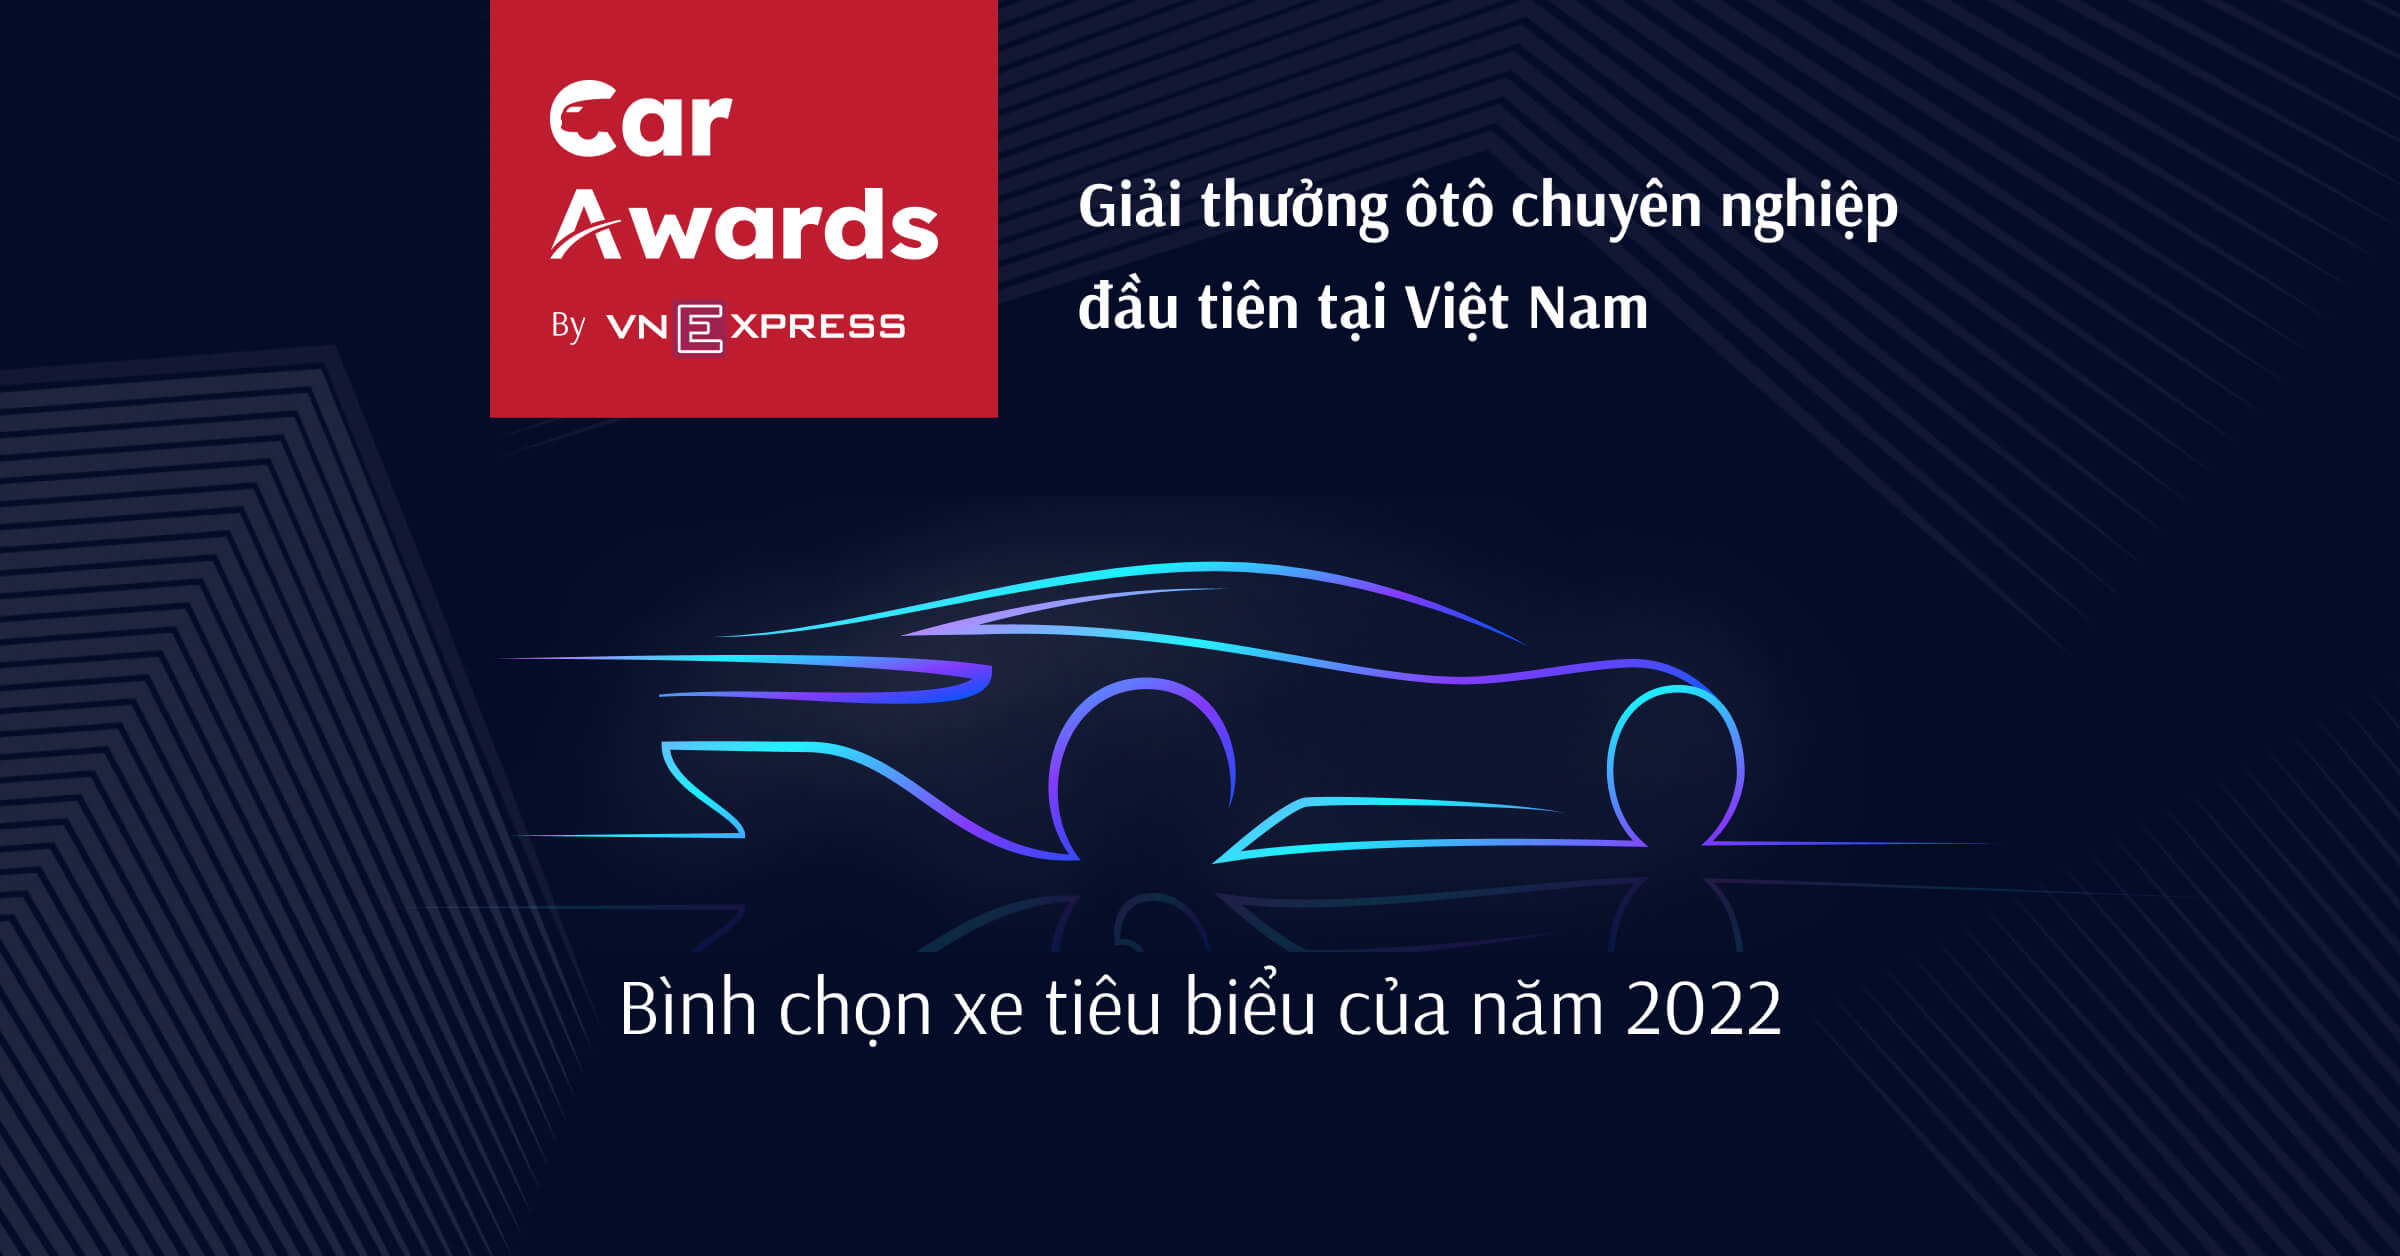 VnExpress công bố Car Awards 2022